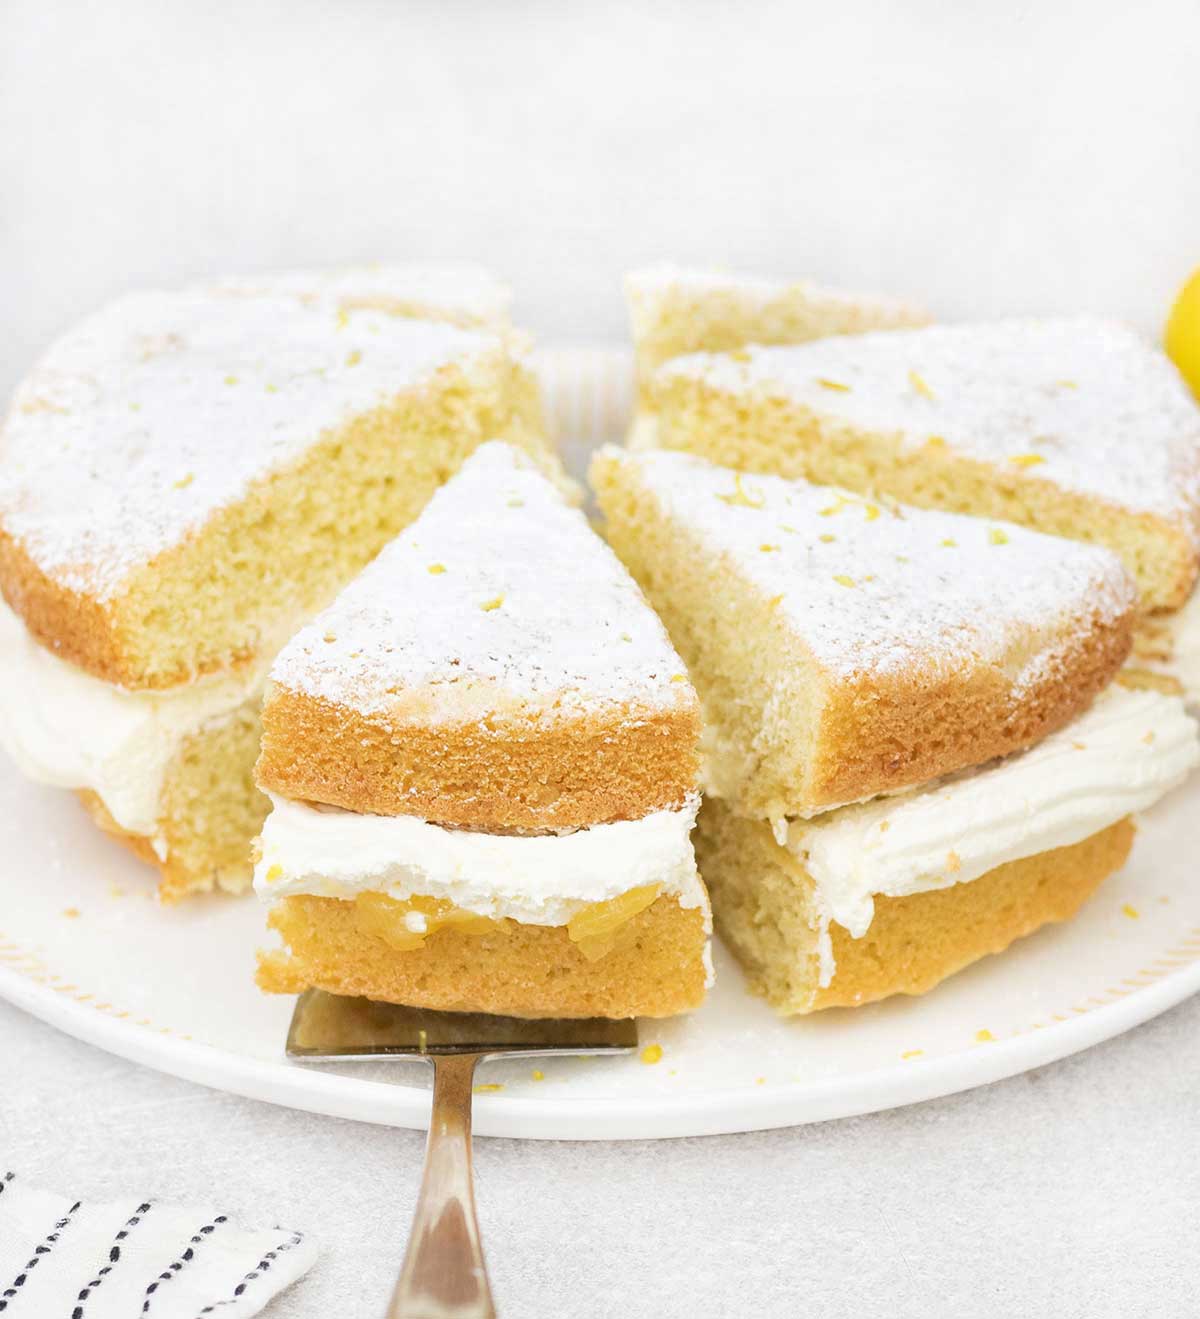 Slices of lemon Victoria sponge cake.